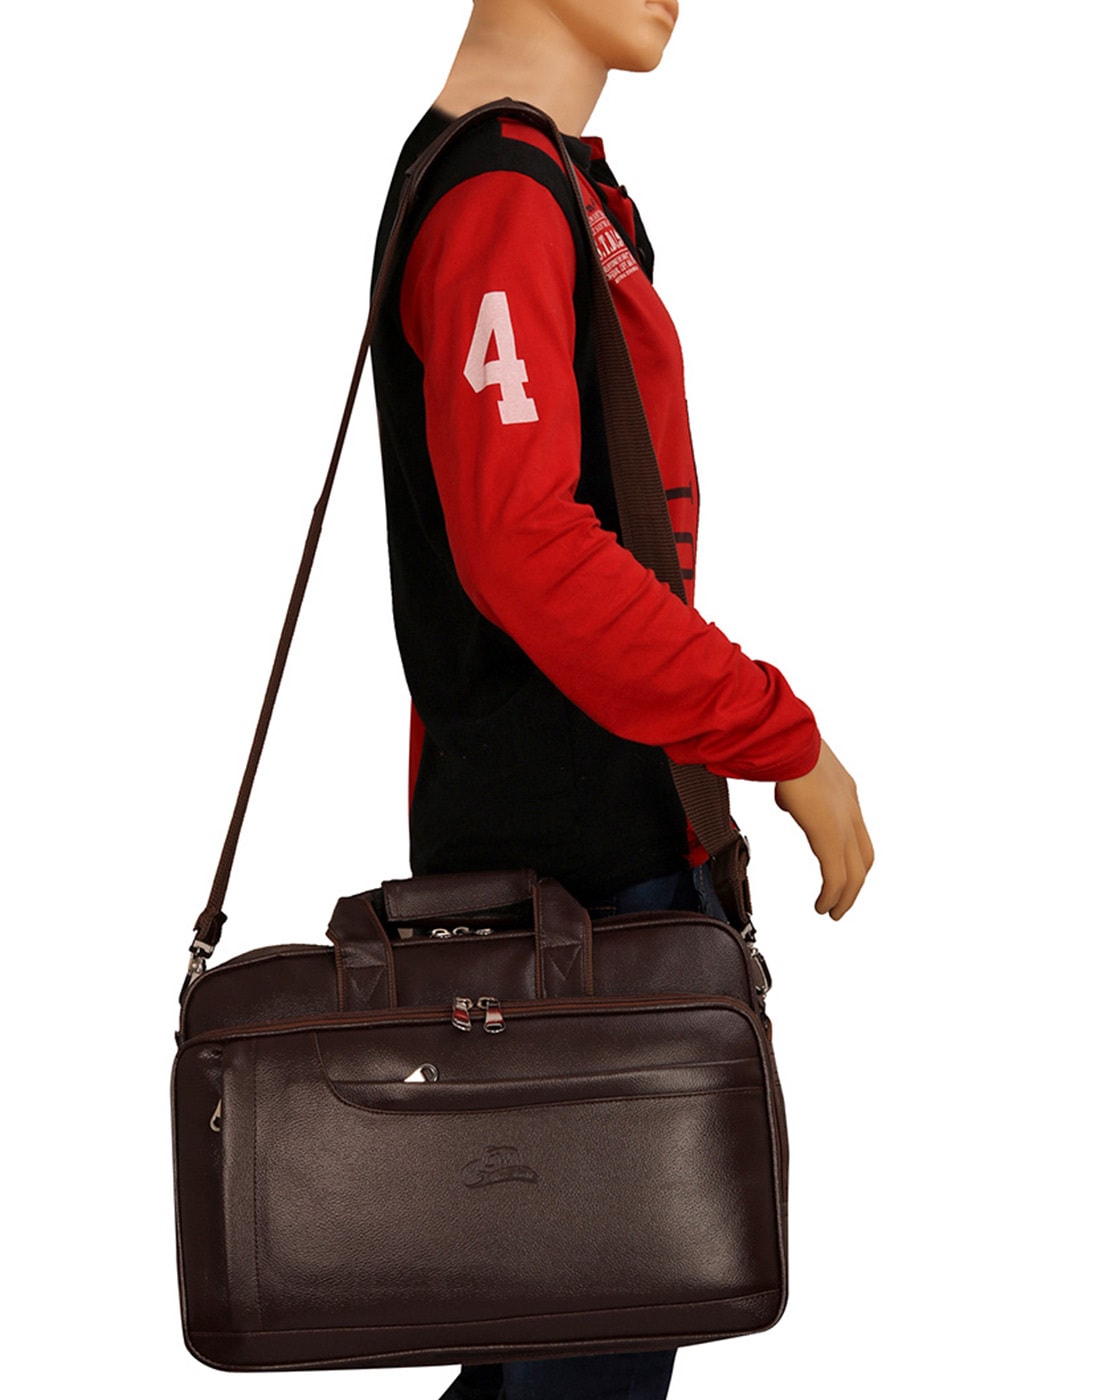 FIPPLE 30 Ltrs Casual Laptop Bag/Backpack for Men Women Boys Girls/Office  School College Teens